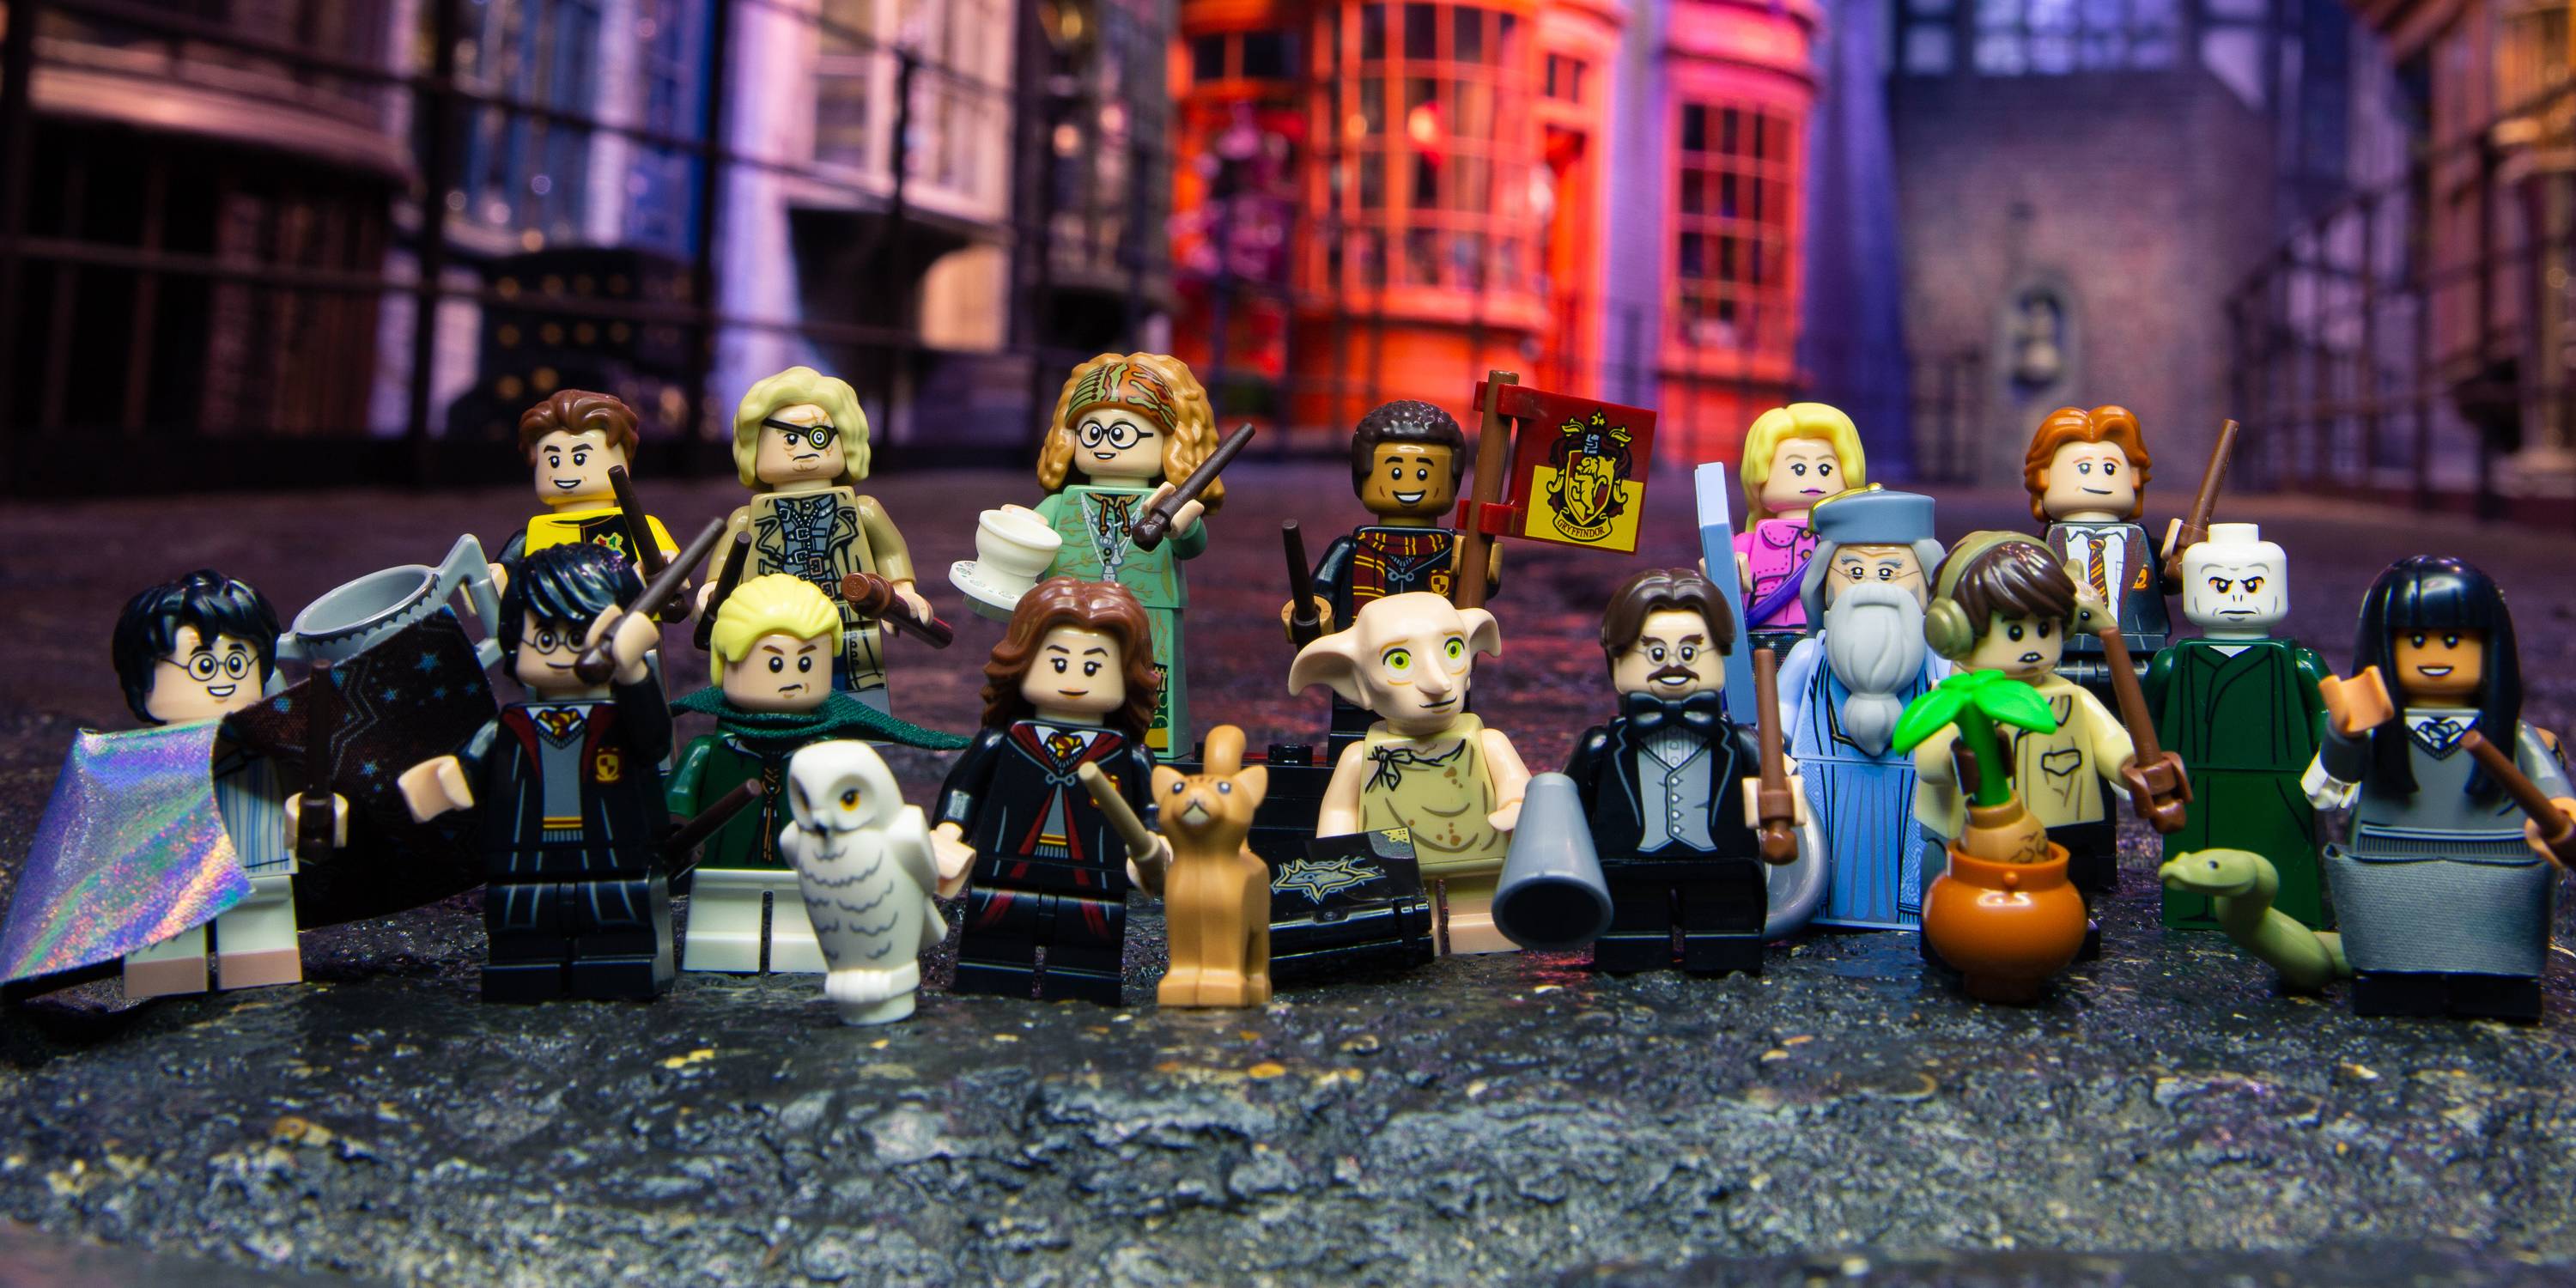 LEGO Harry Potter Fantastic Beast Series ALBUS DUMBLEDORE Collectible Minifigure